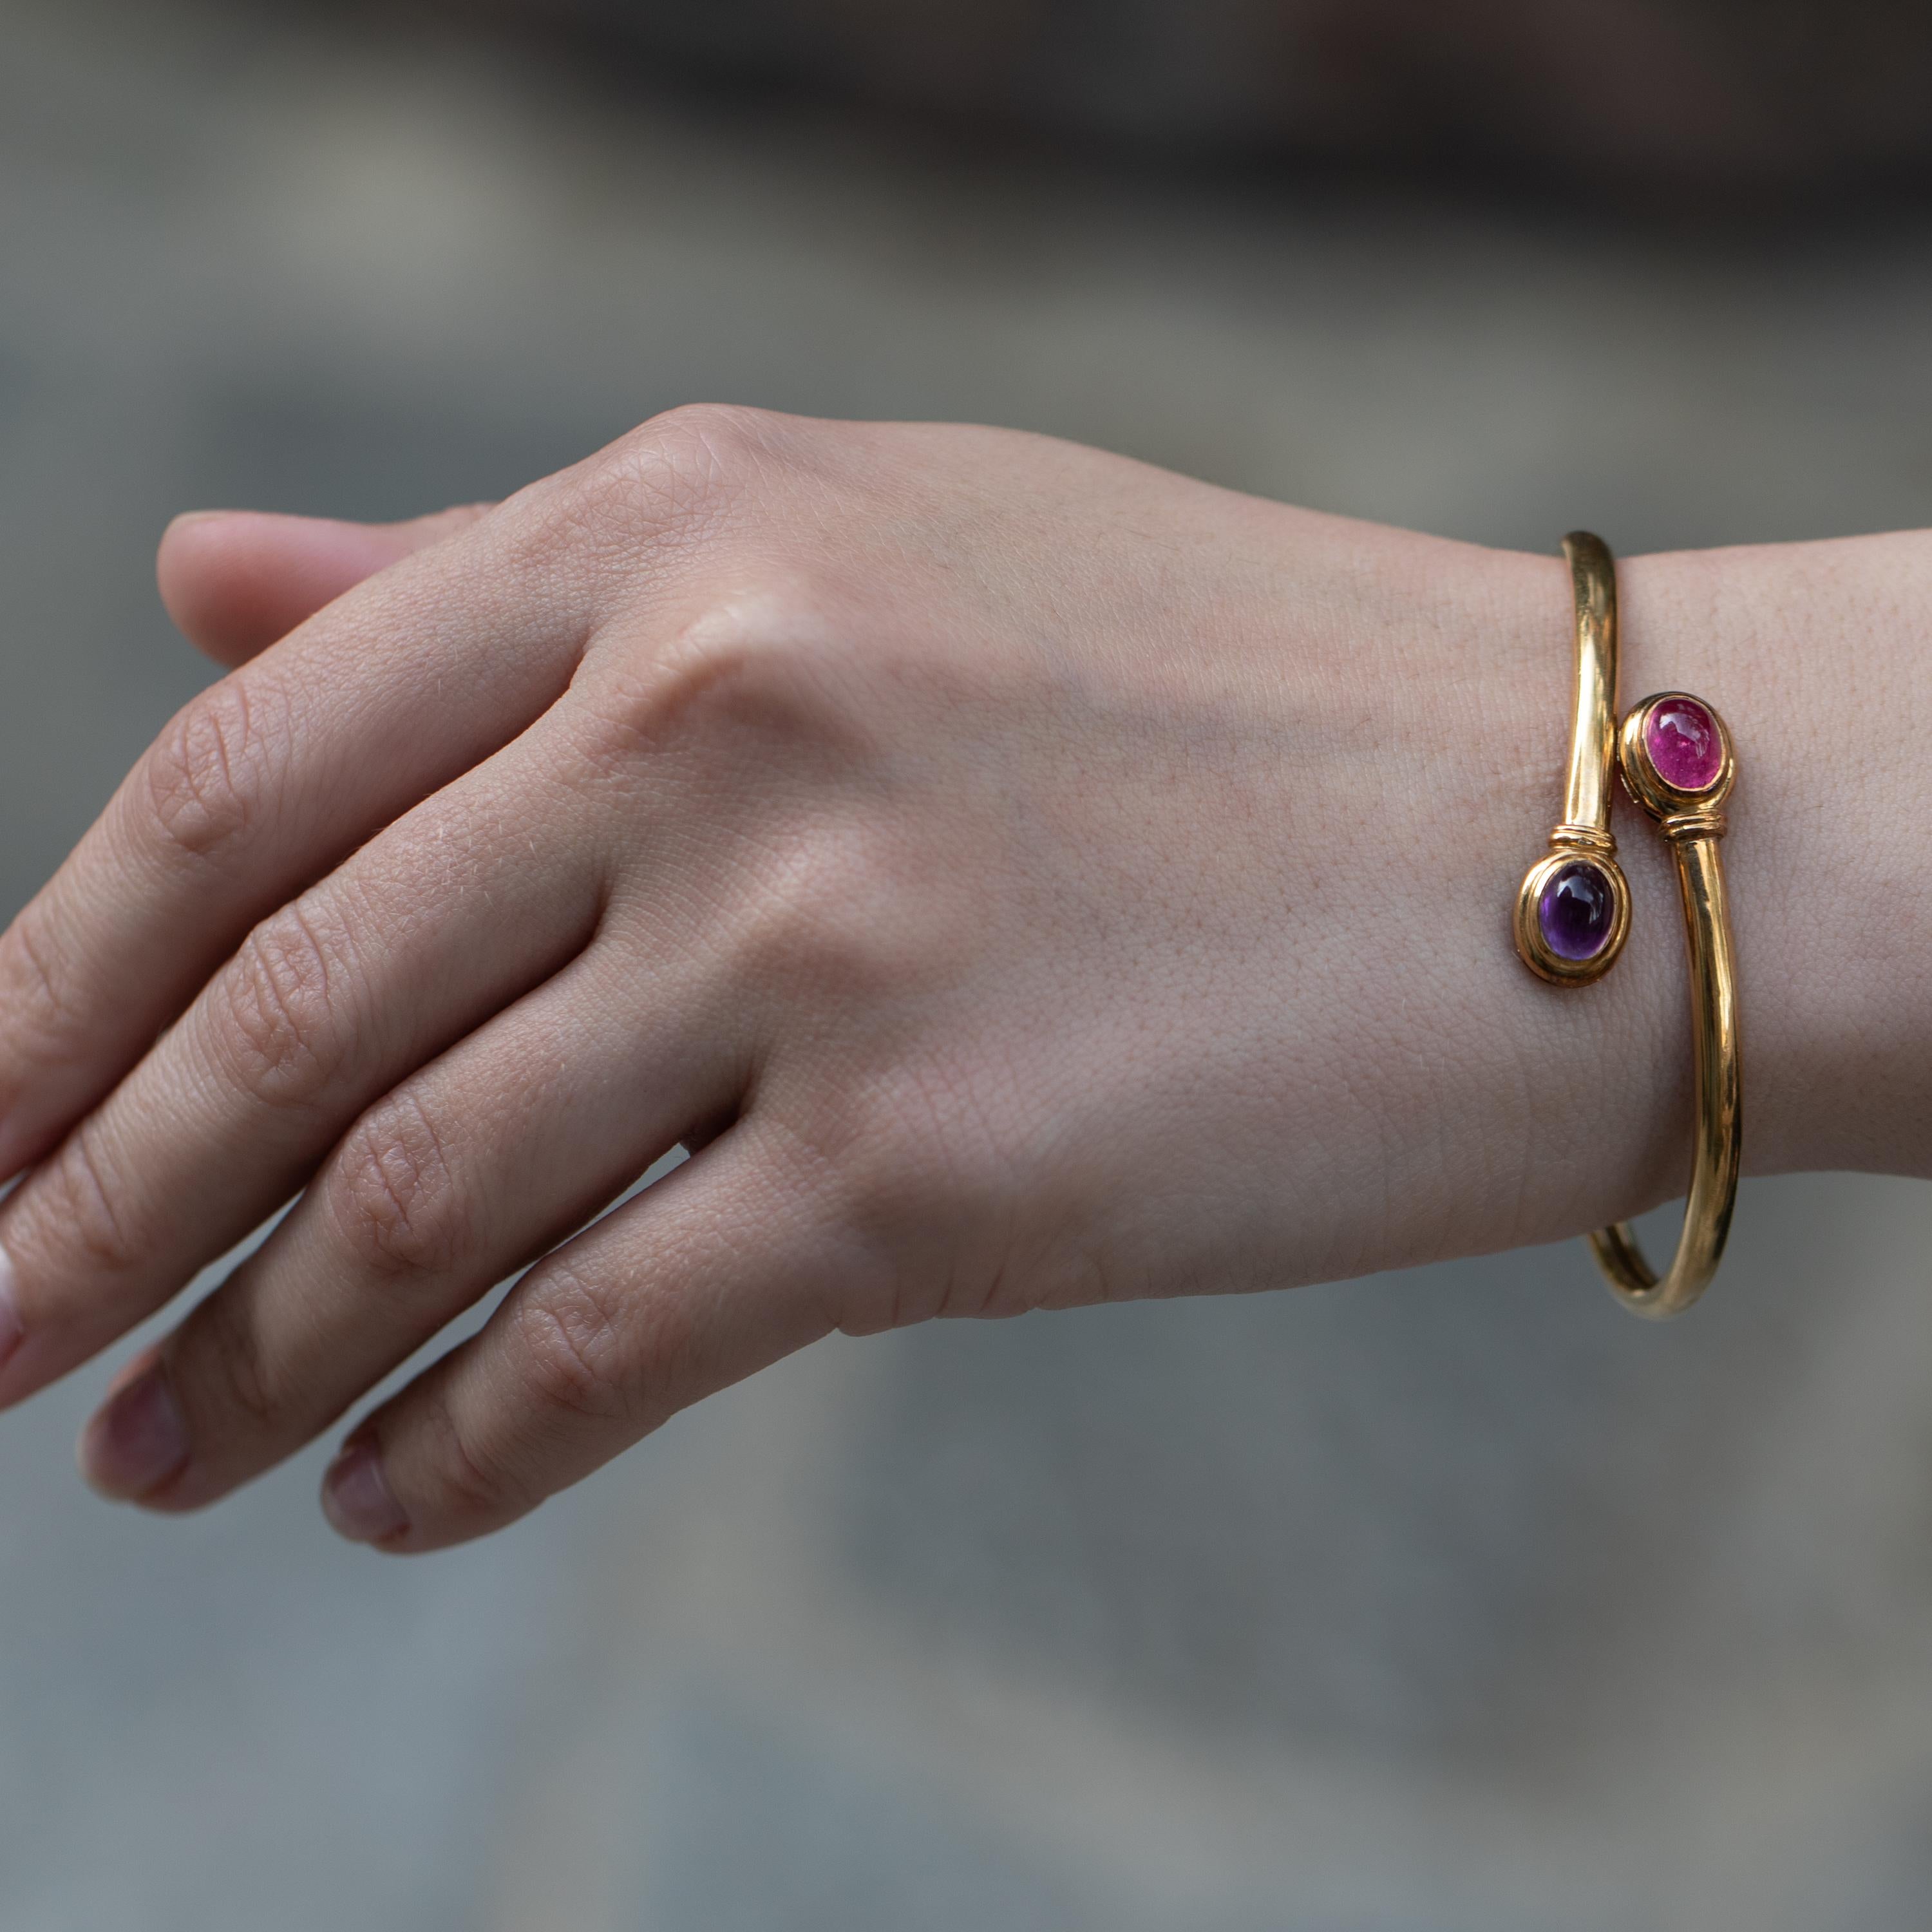 Designer: Van Cleef & Arpels
Metal: 18K Yellow Gold
Gemstones: 1 Carat Pink Tourmaline & 1 Carat Amethyst Bracelet